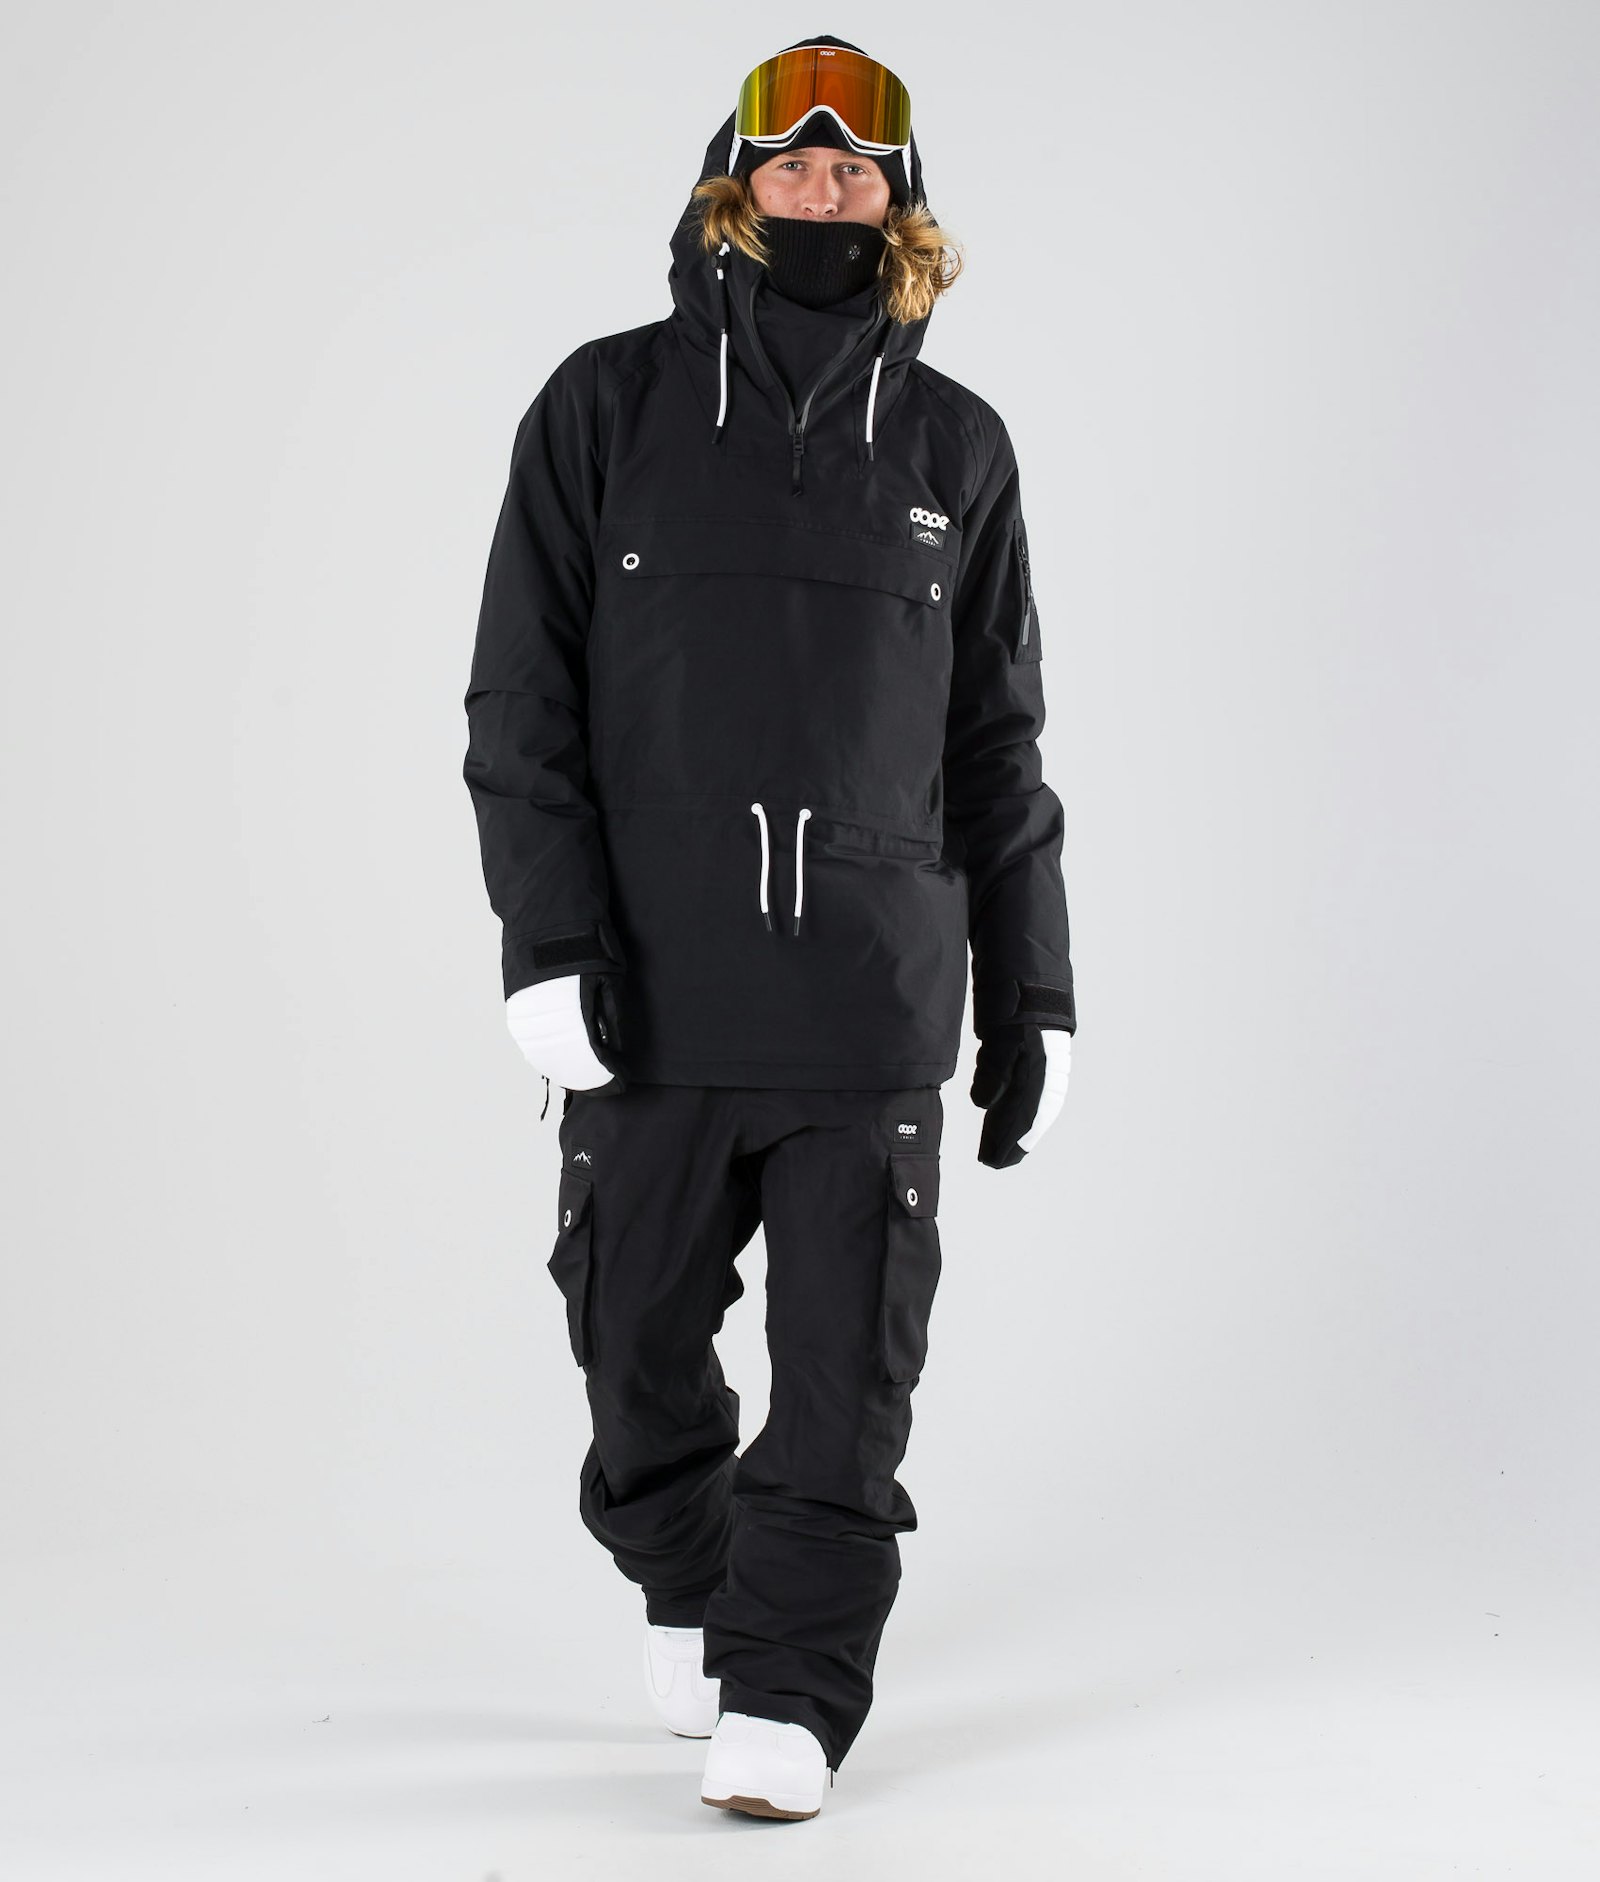 Annok 2019 Veste Snowboard Homme Black